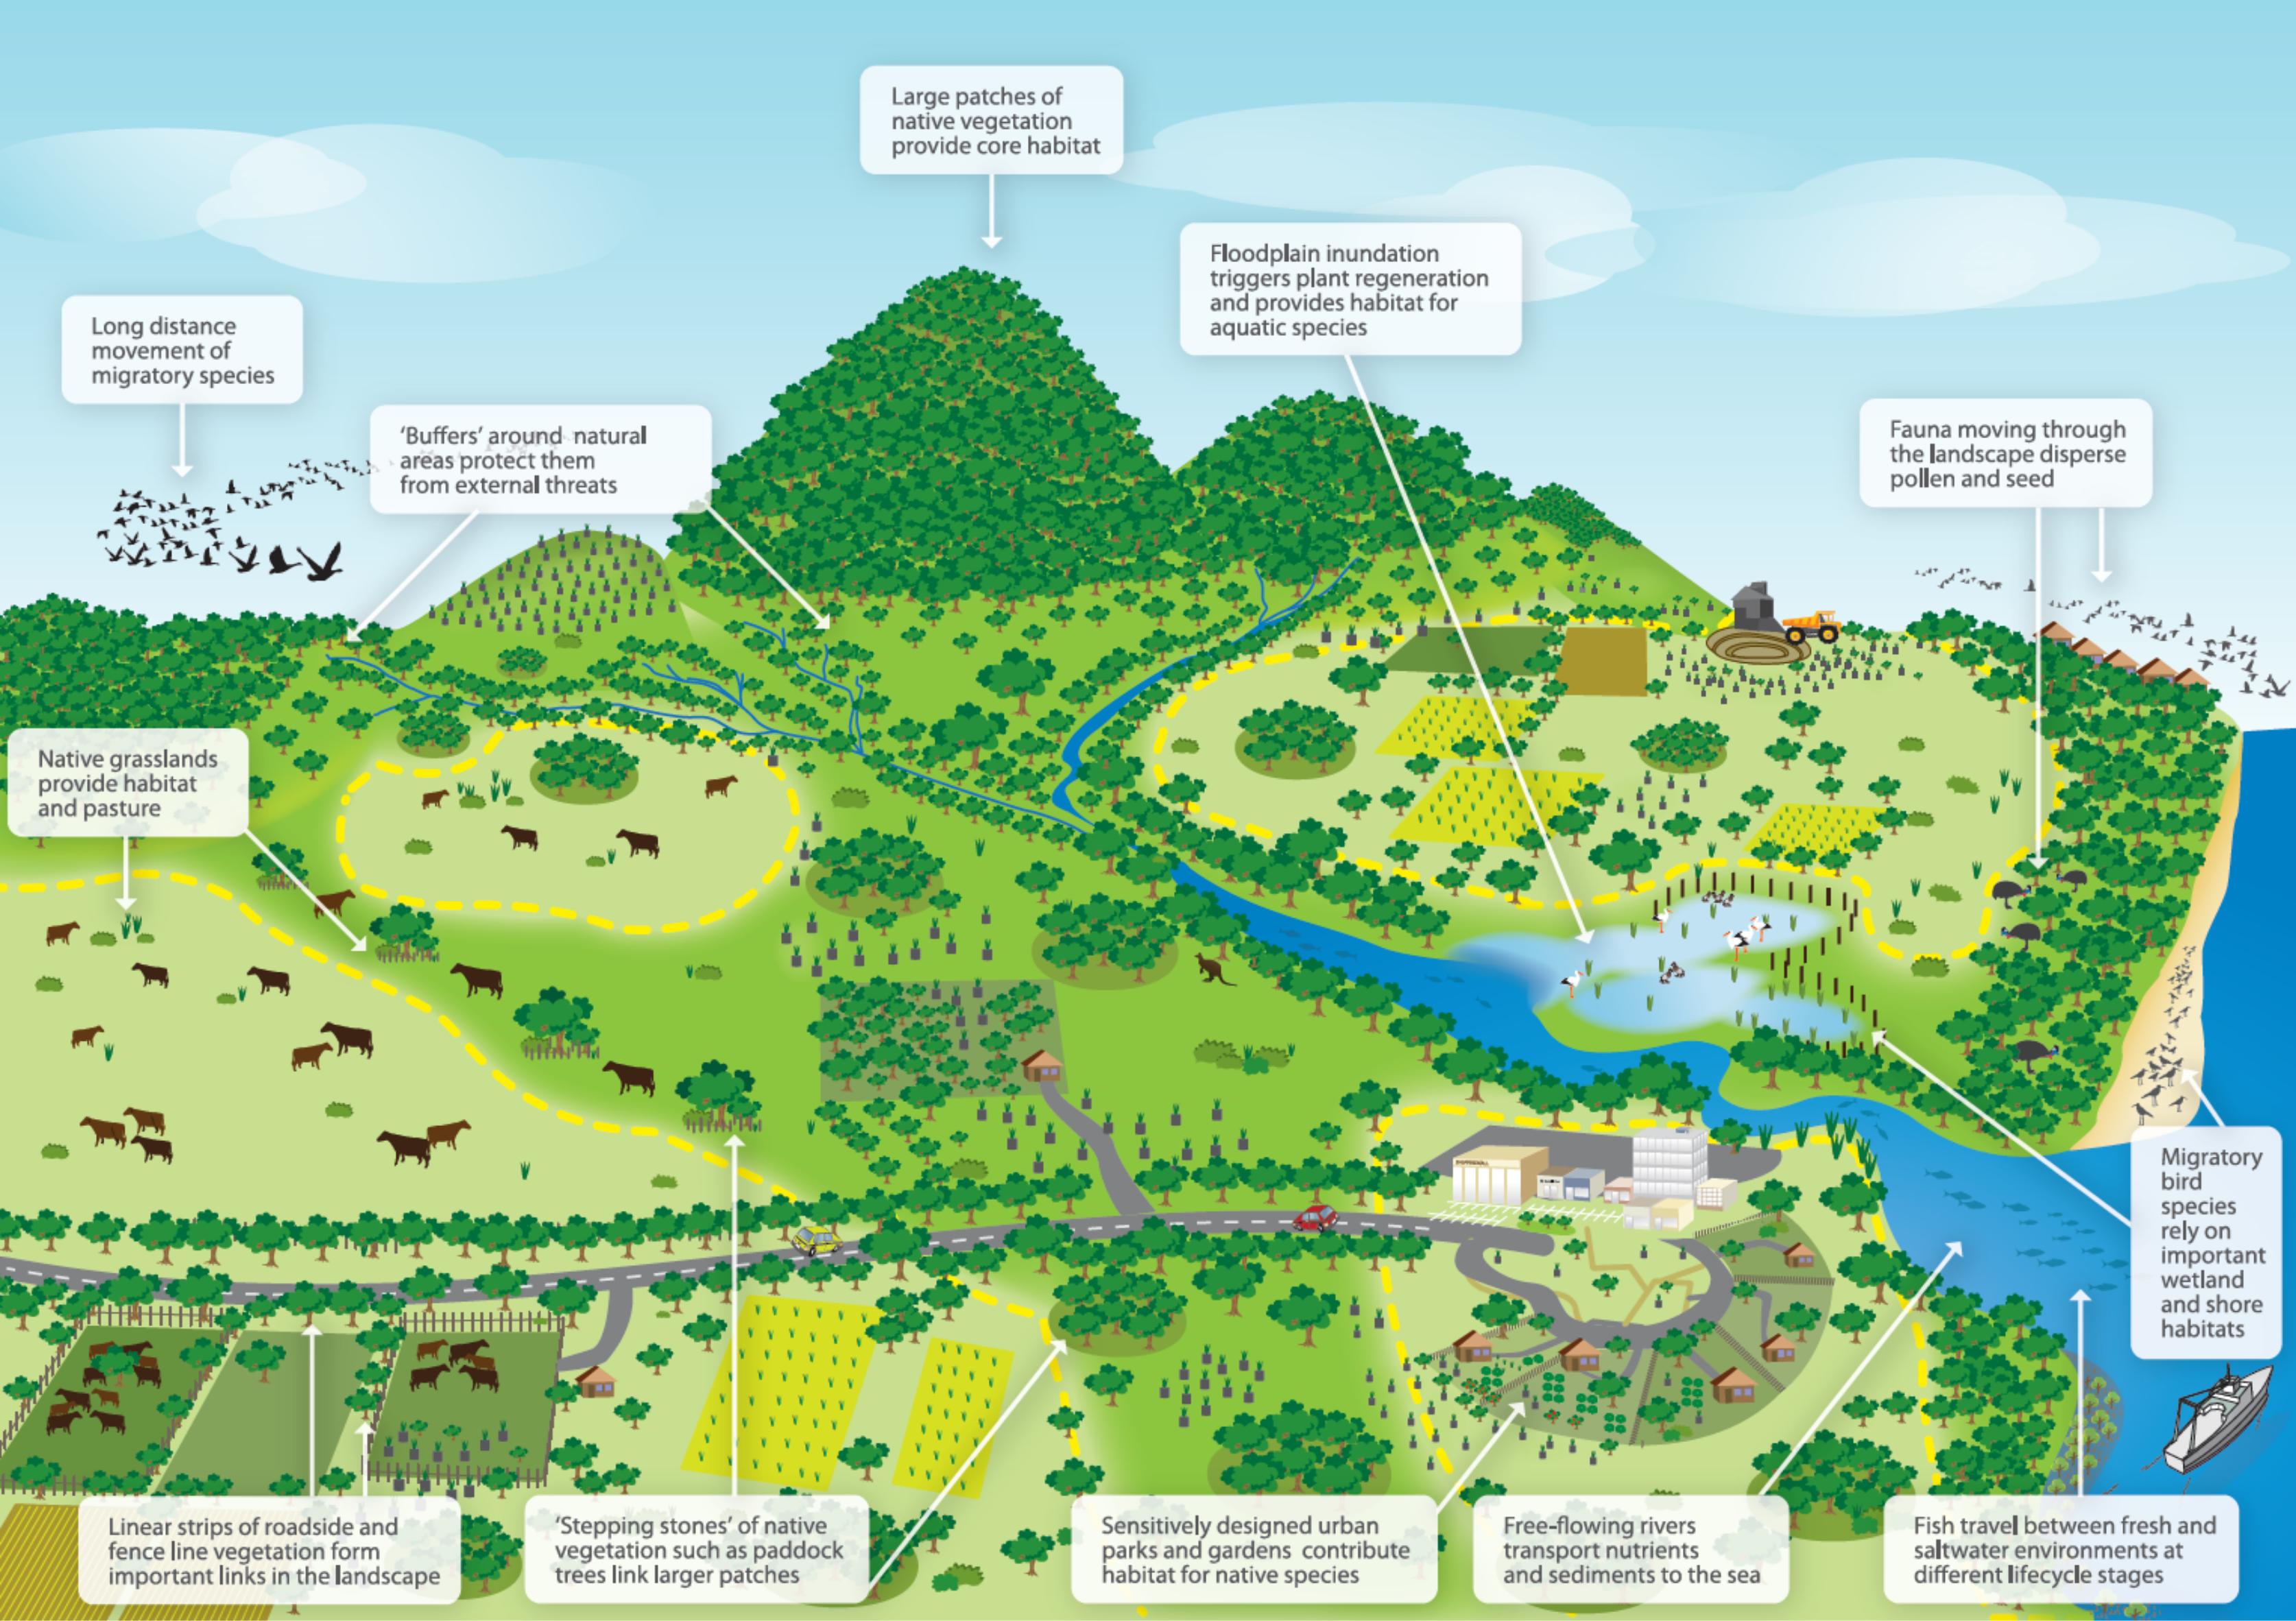 Landscape elements that contribute to wildlife corridors